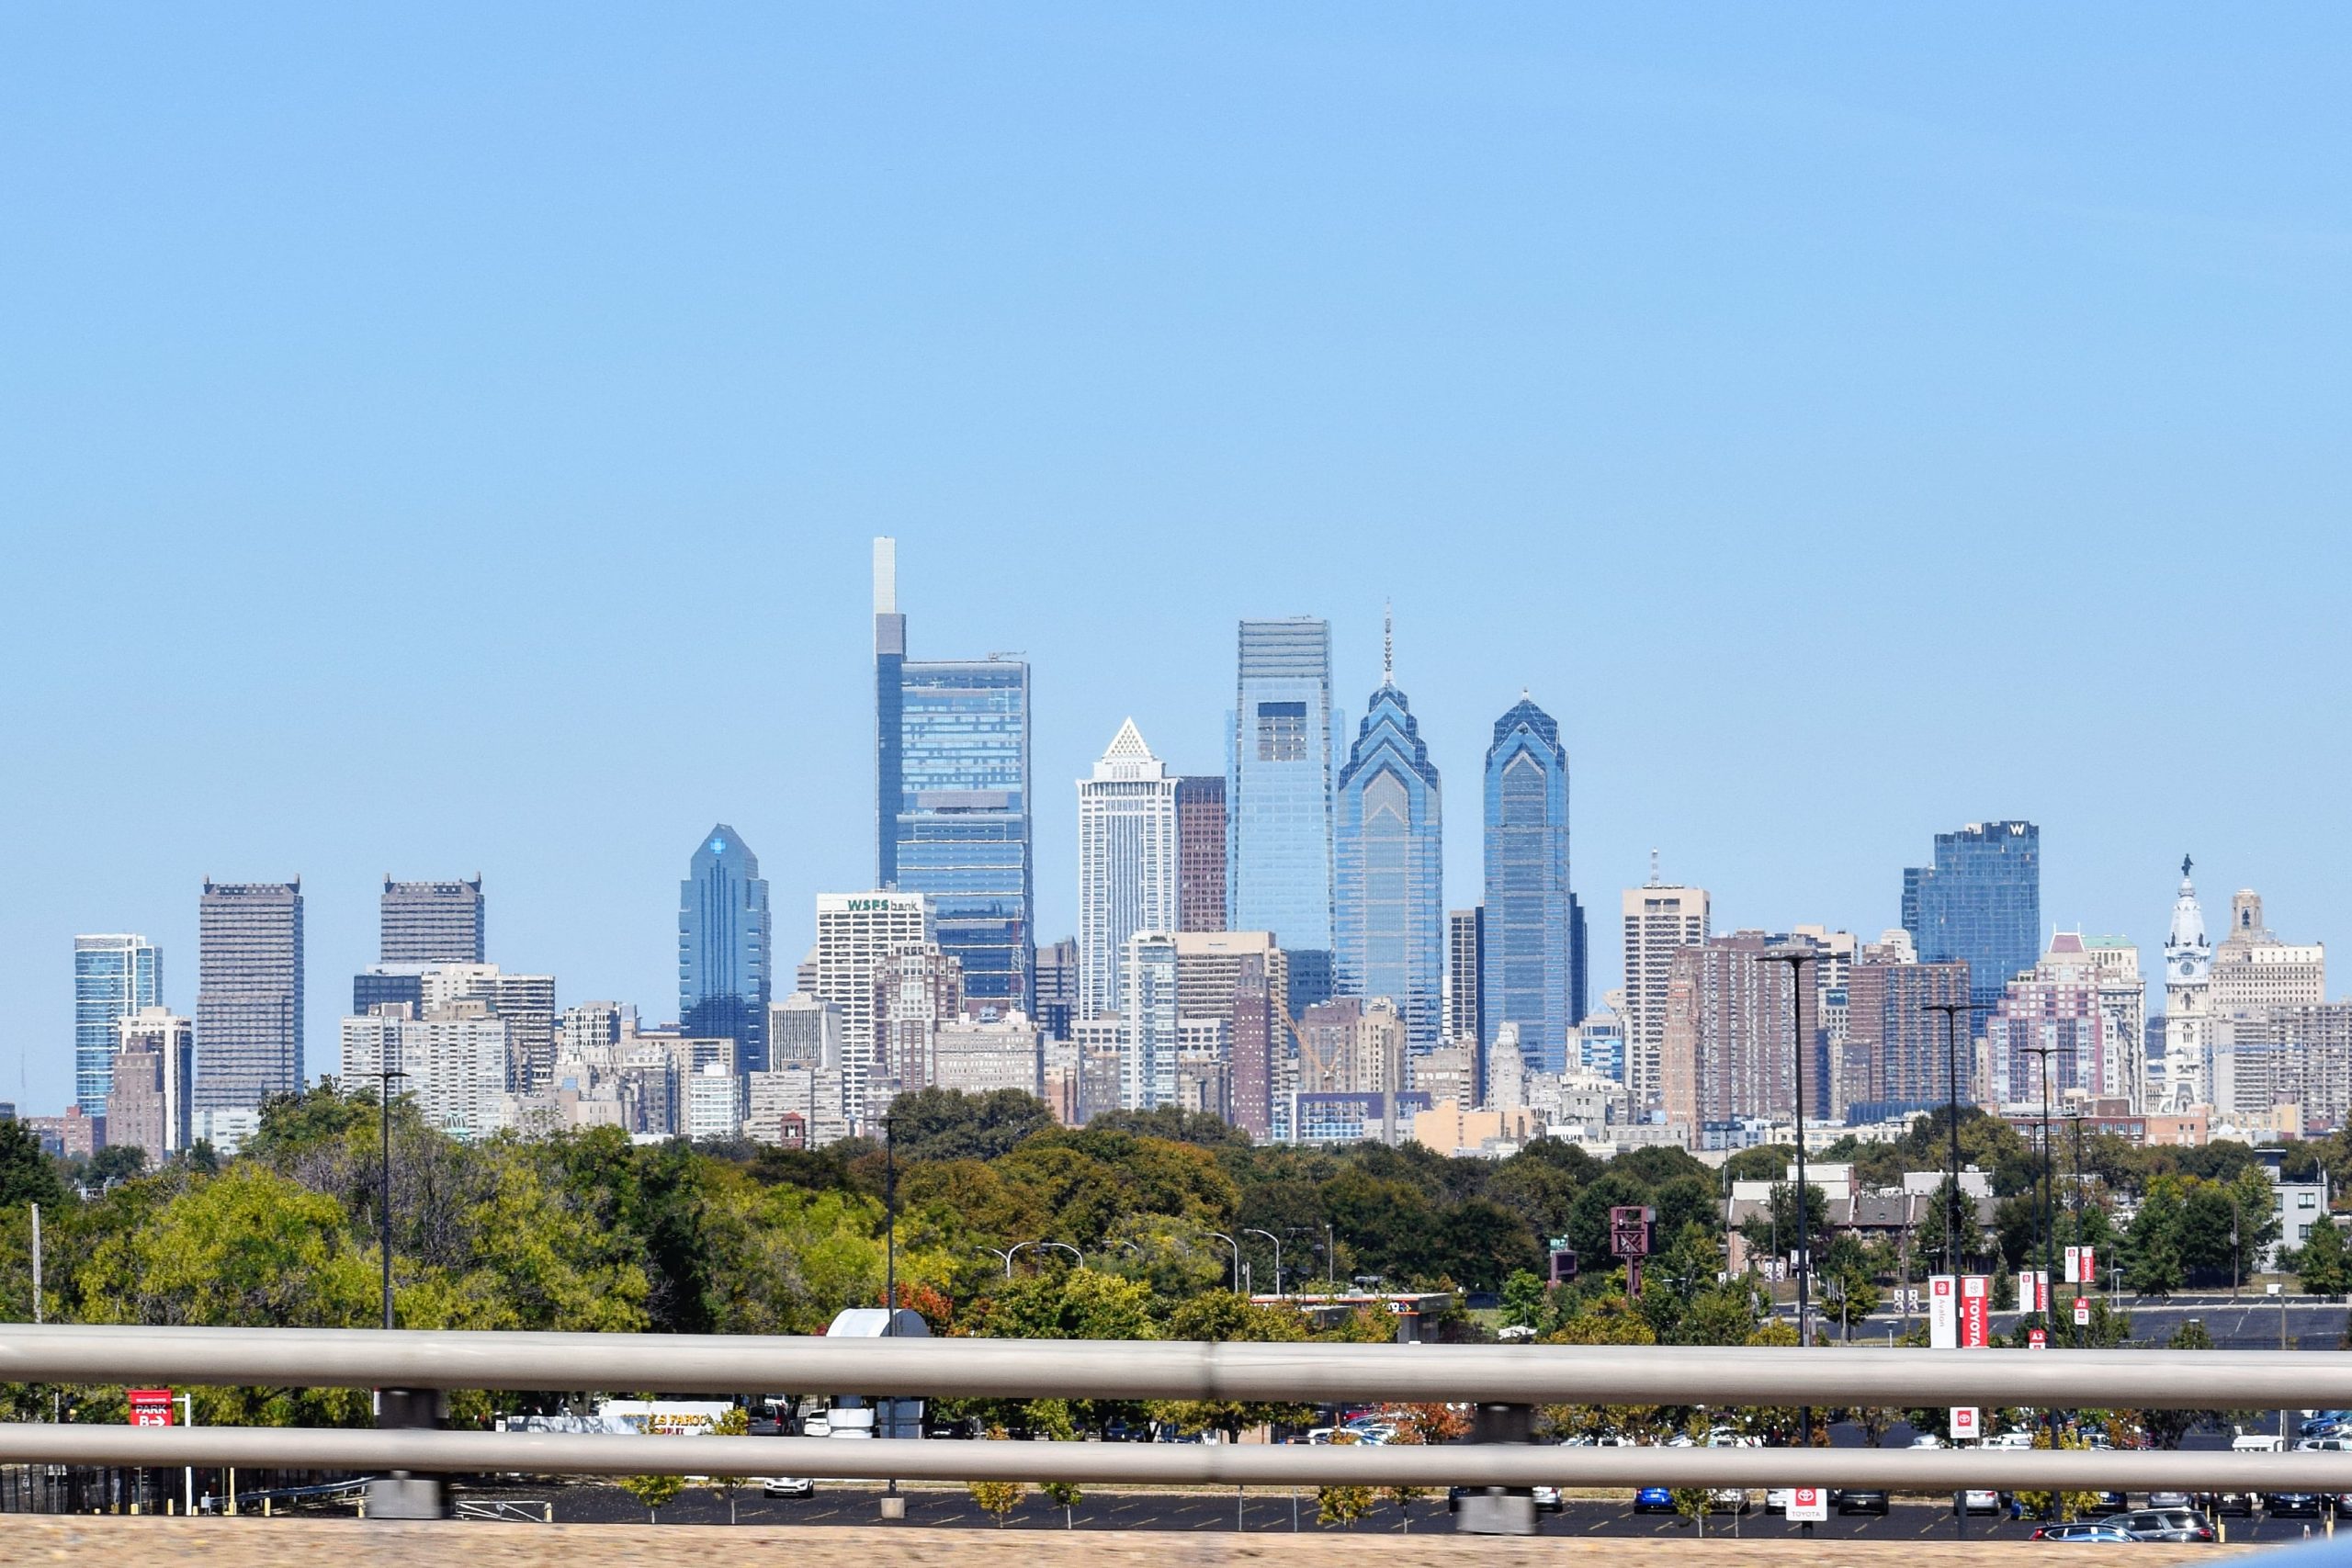 Philadelphia skyline from the I-95 2019. Photo by Thomas Koloski